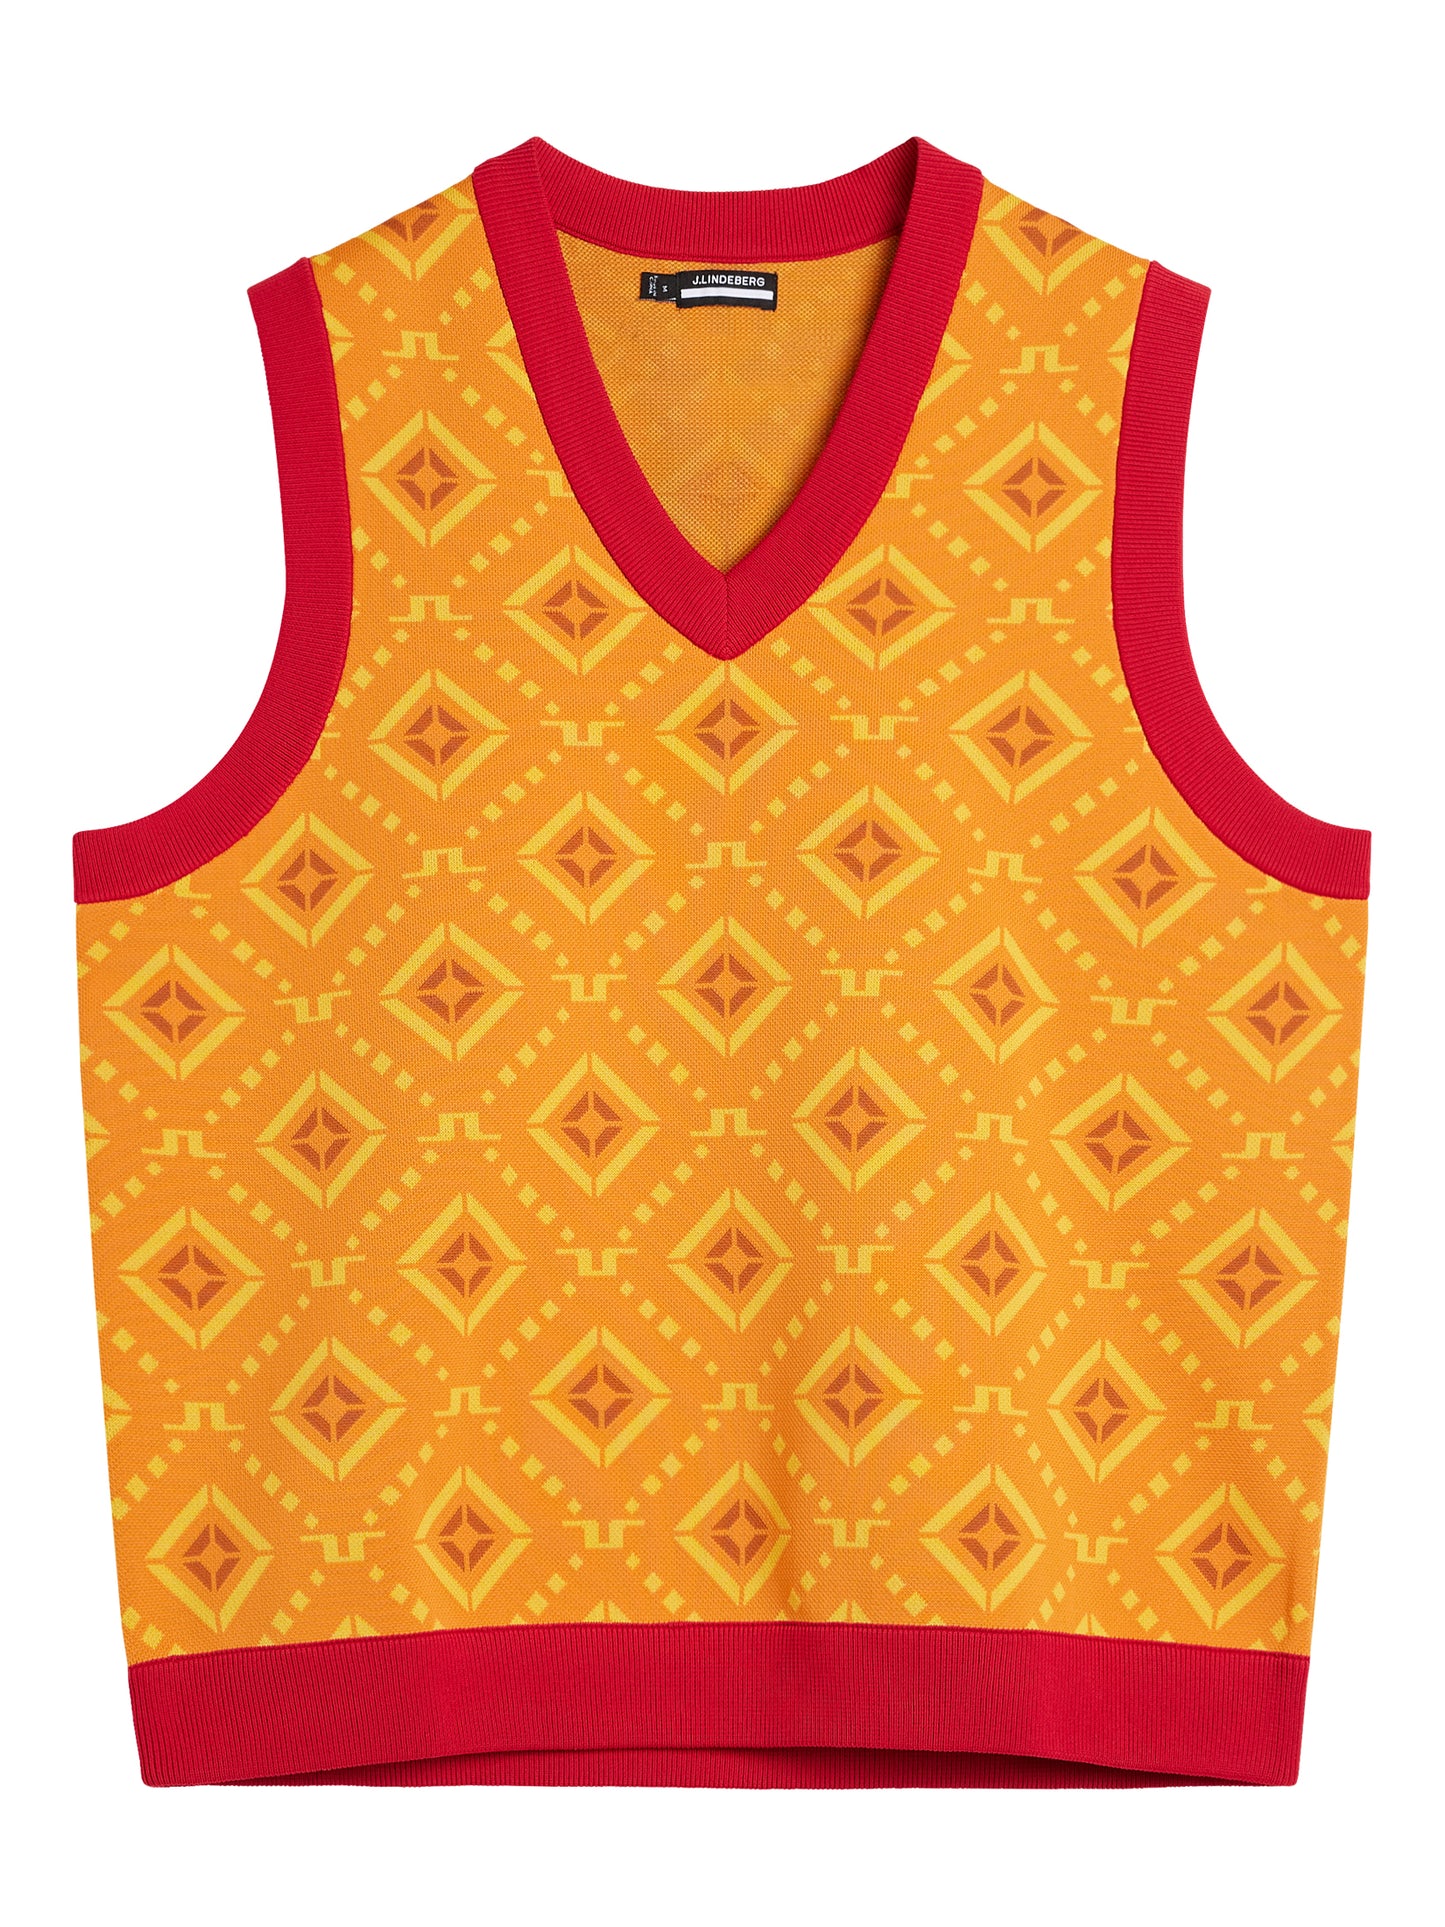 Jack Knitted Vest / Orange Diamond logo